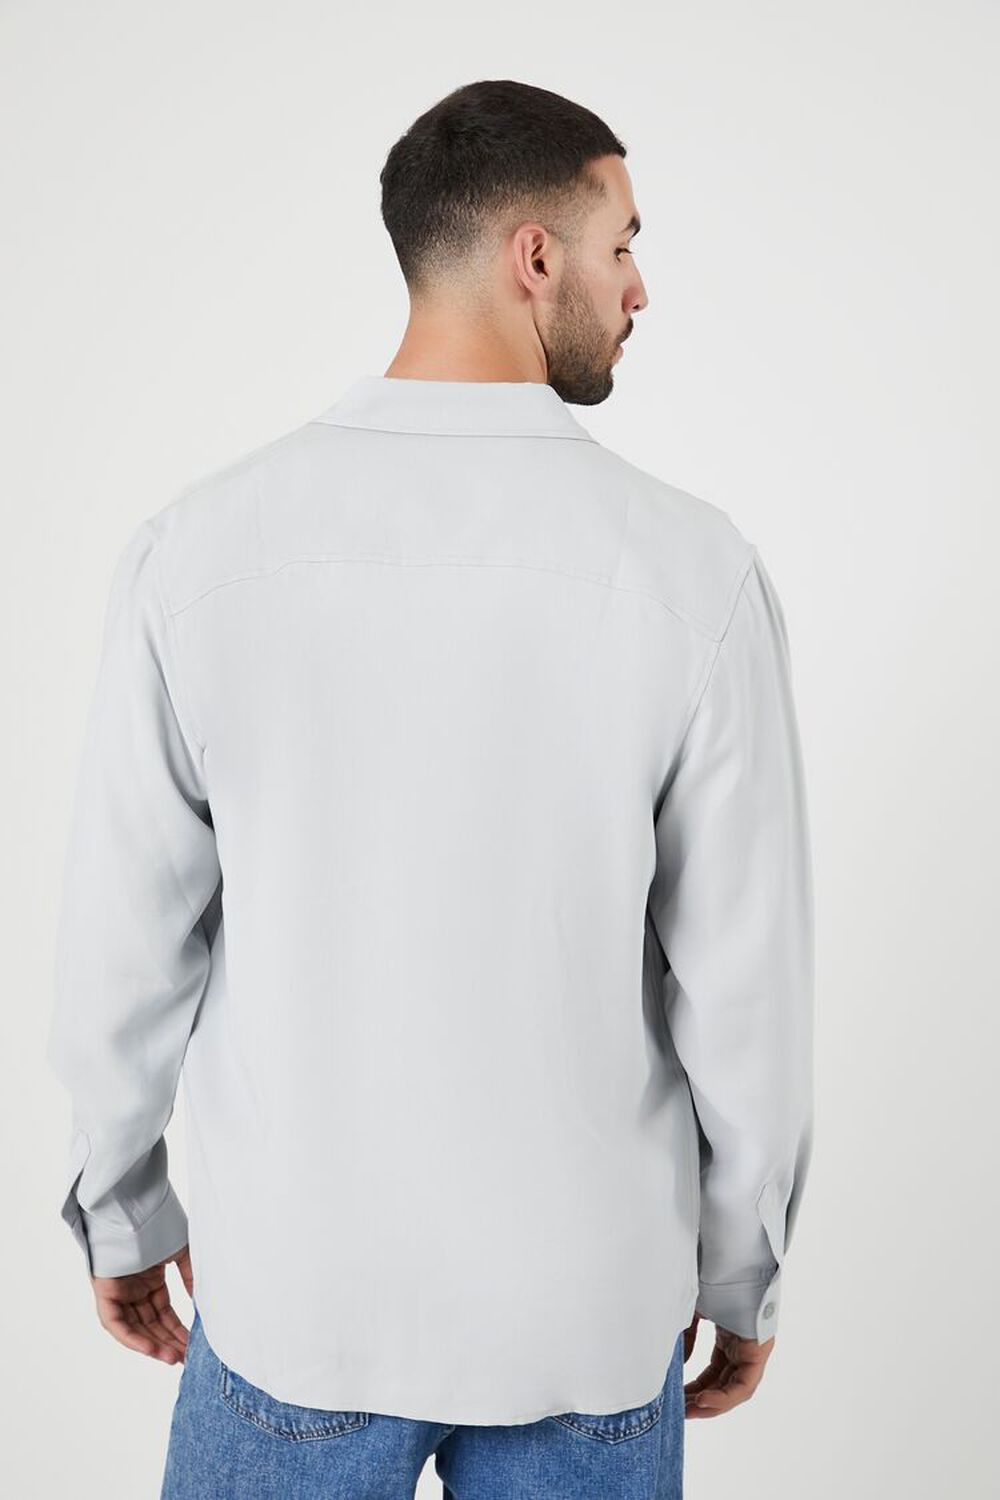 LIGHT GREY Rayon-Blend Pocket Shirt, image 3